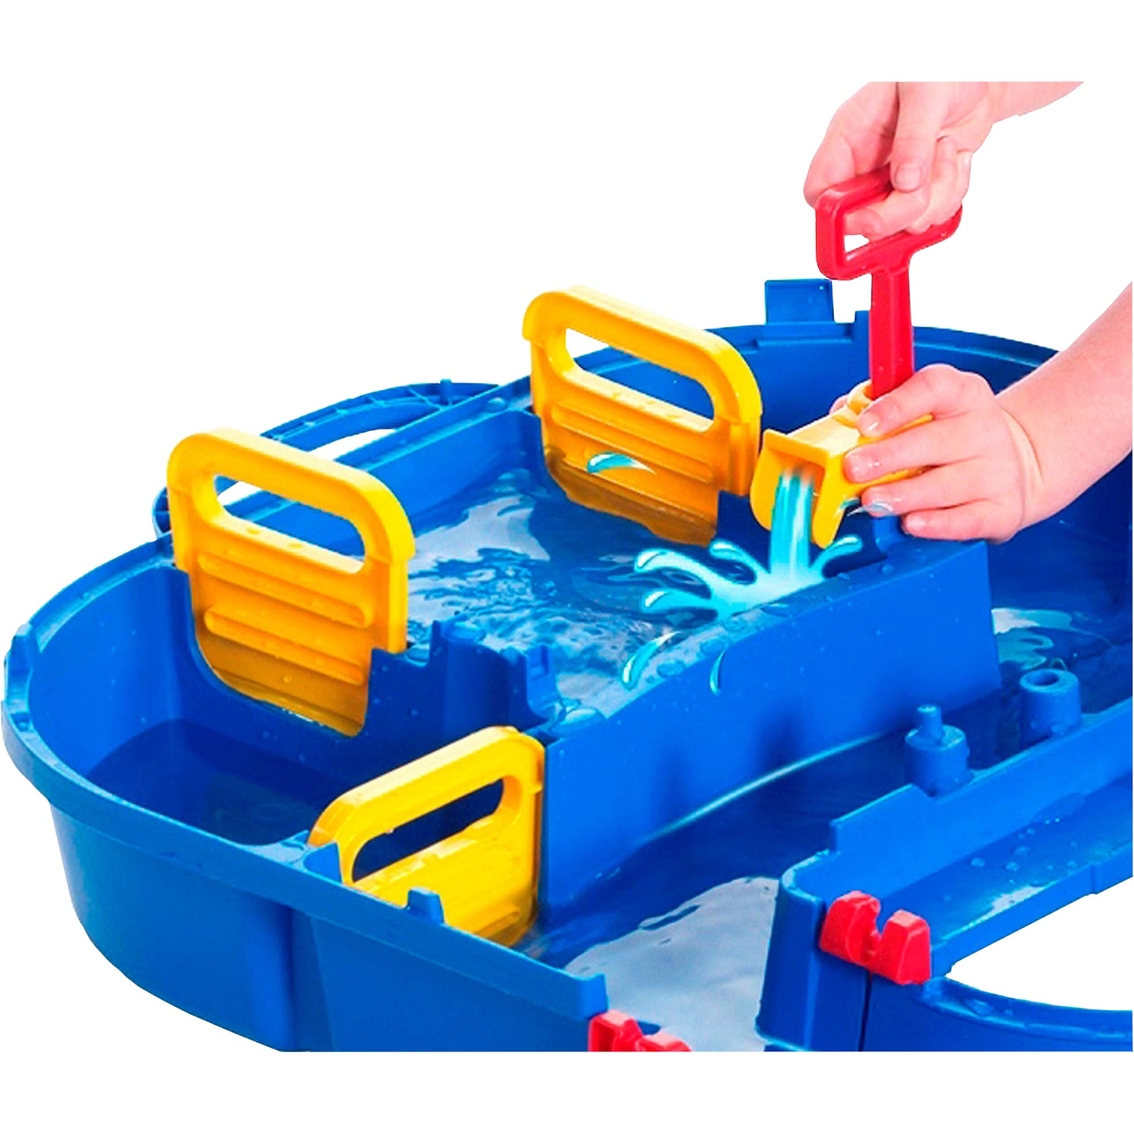 Aquaplay MegaBridge Water Playset - Image 2 of 5